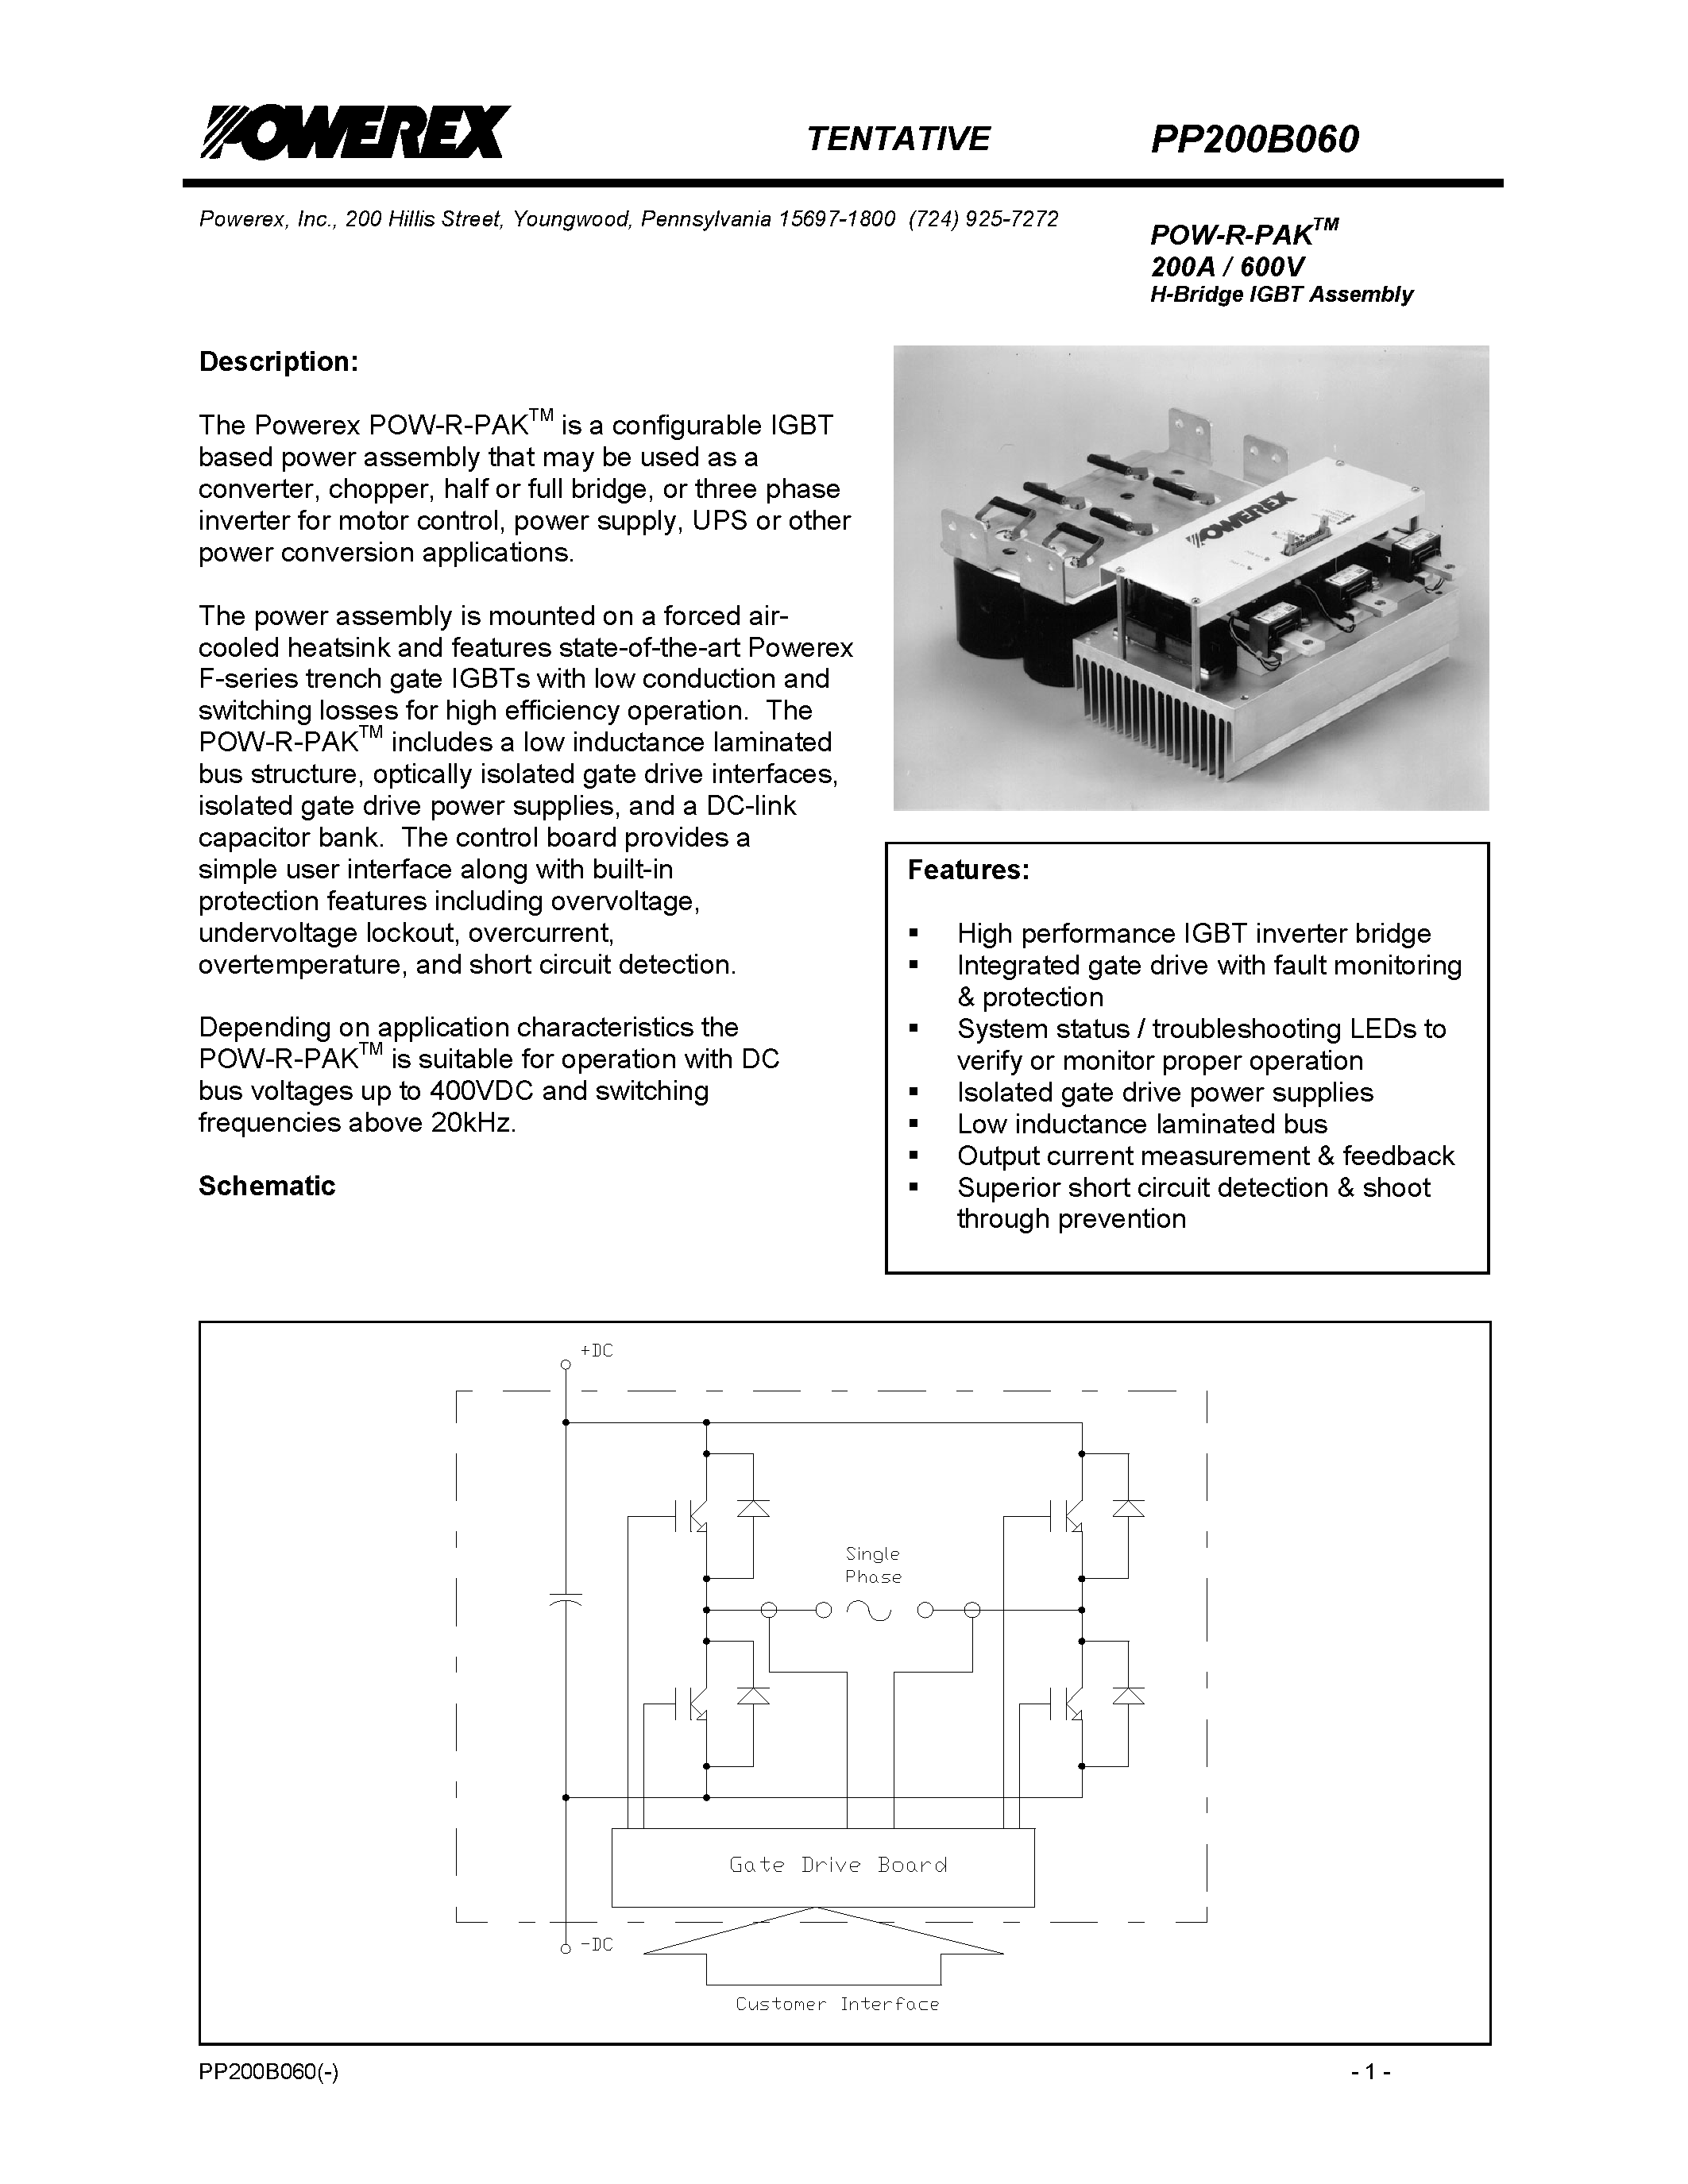 Даташит PP200B060 - POW-R-PAK 200A / 600V H-Bridge IGBT Assembly страница 1